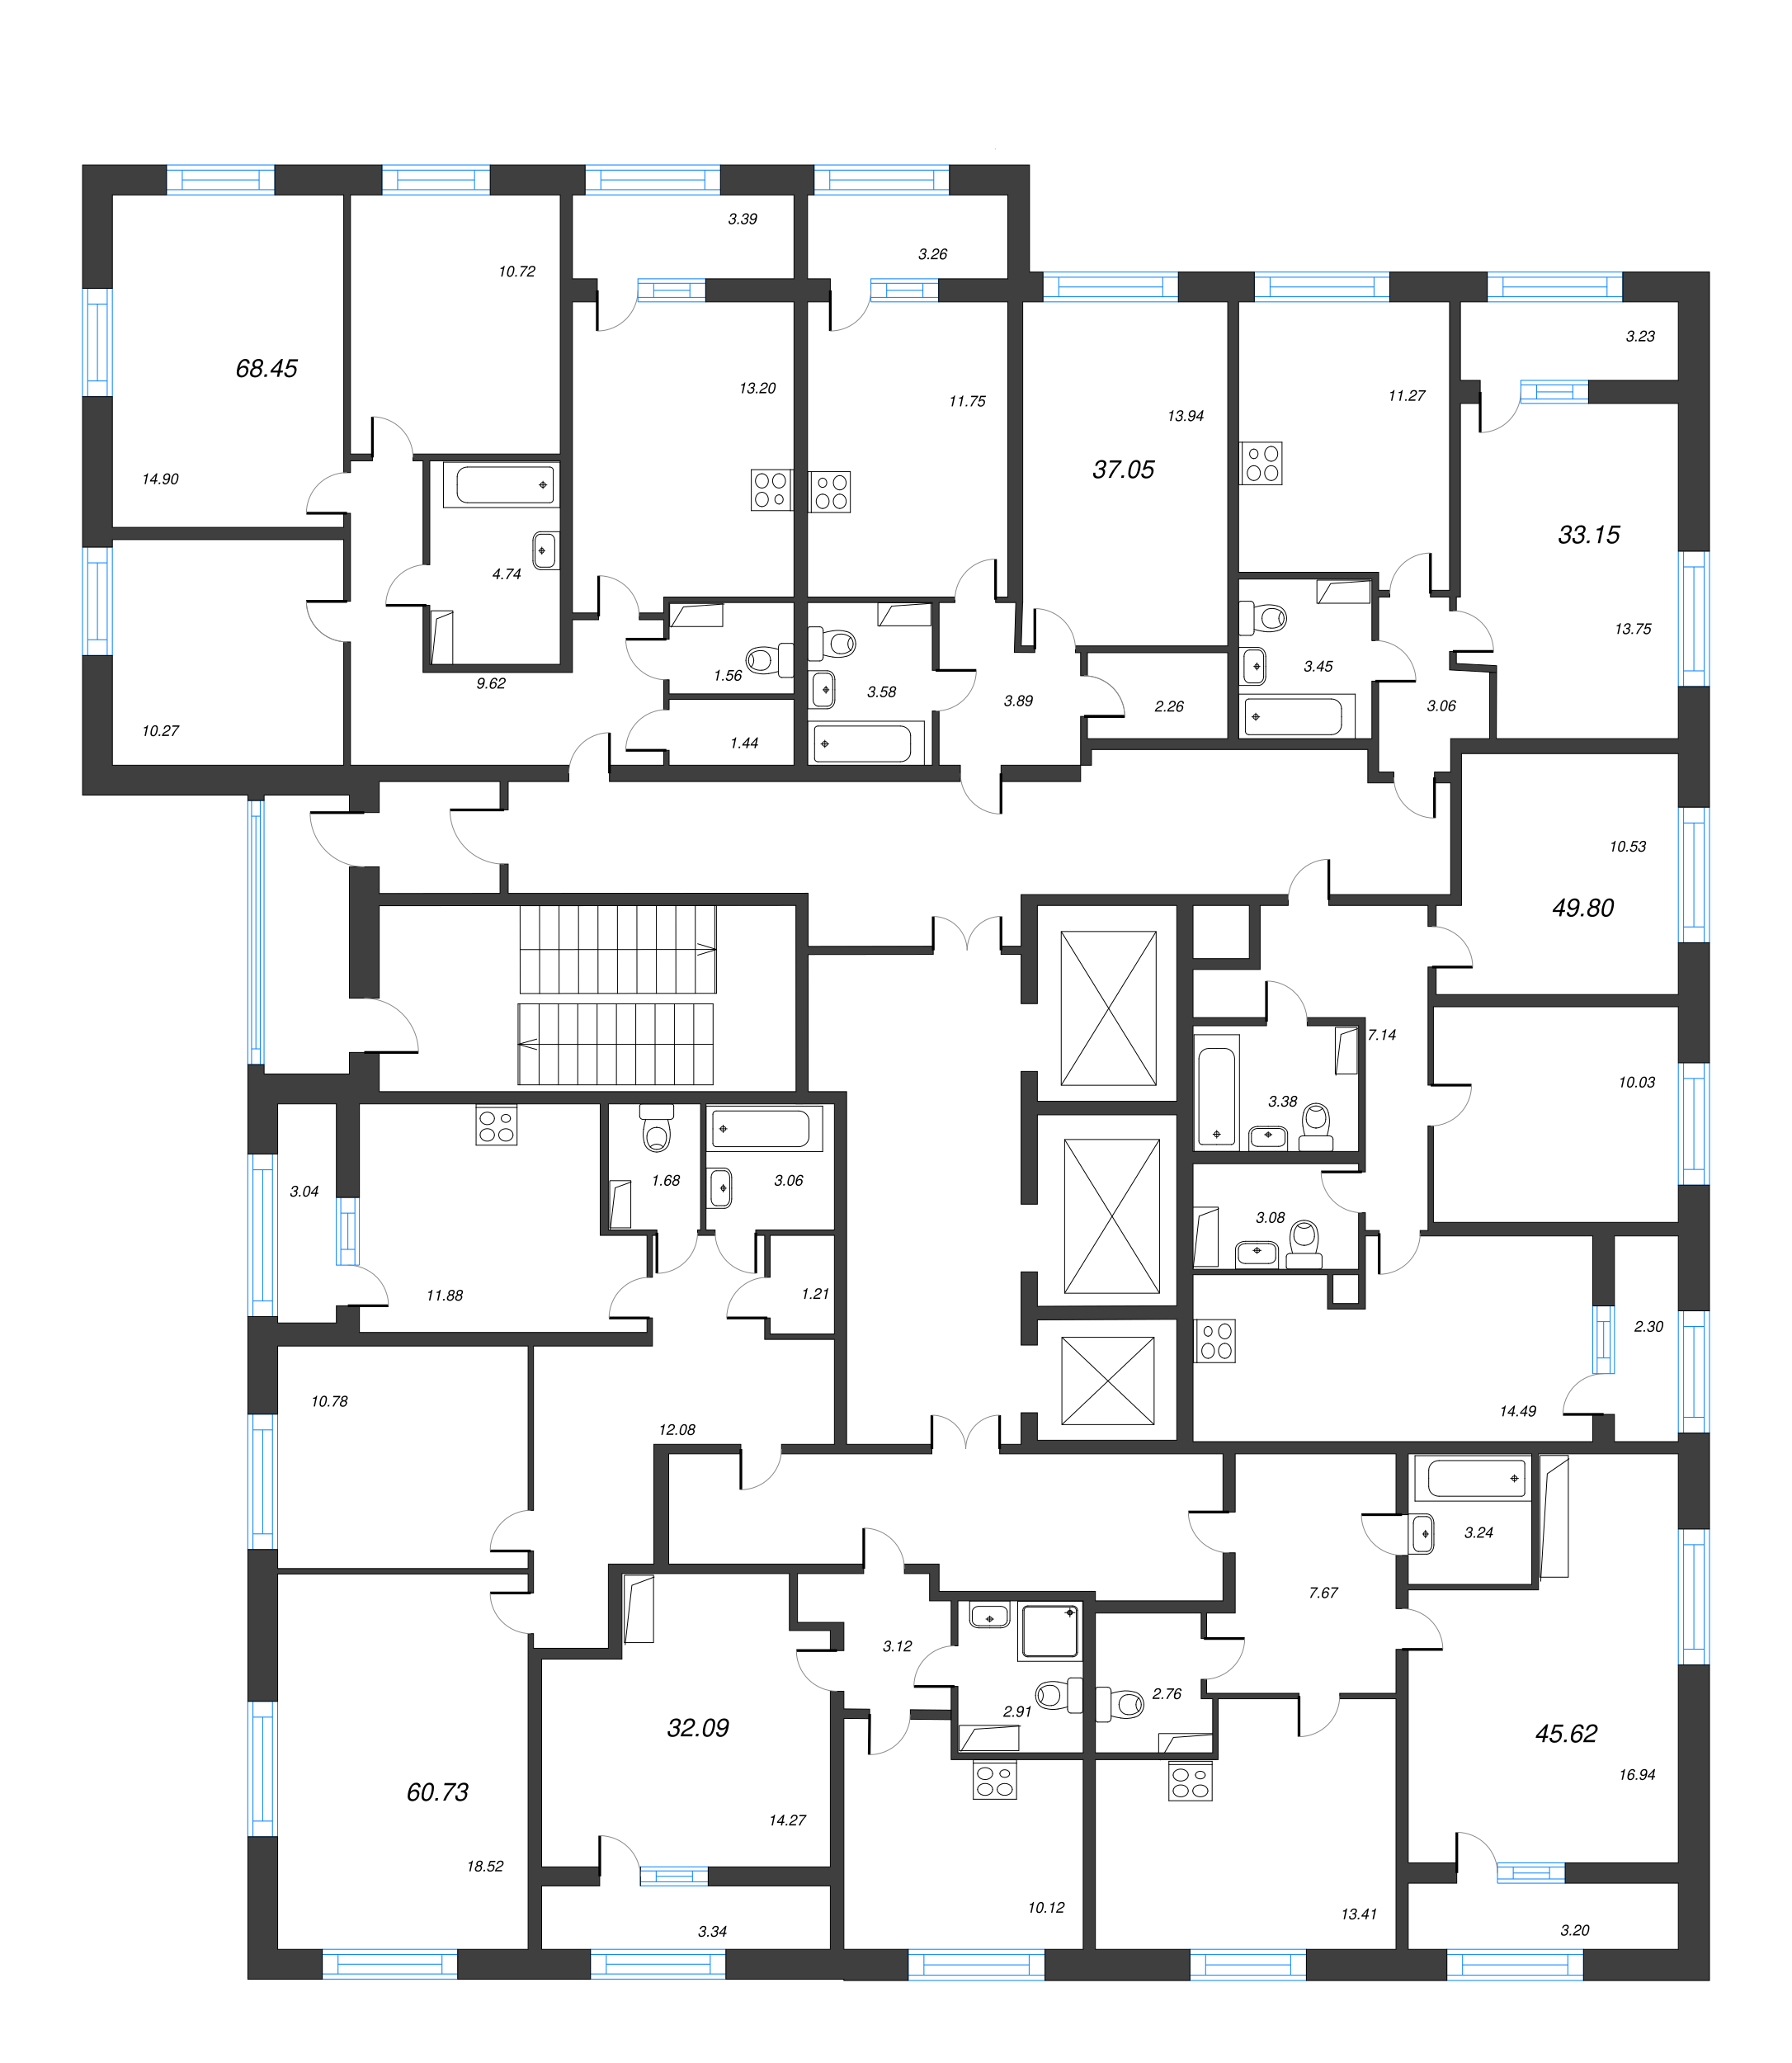 1-комнатная квартира, 33.15 м² в ЖК "БелАрт" - планировка этажа